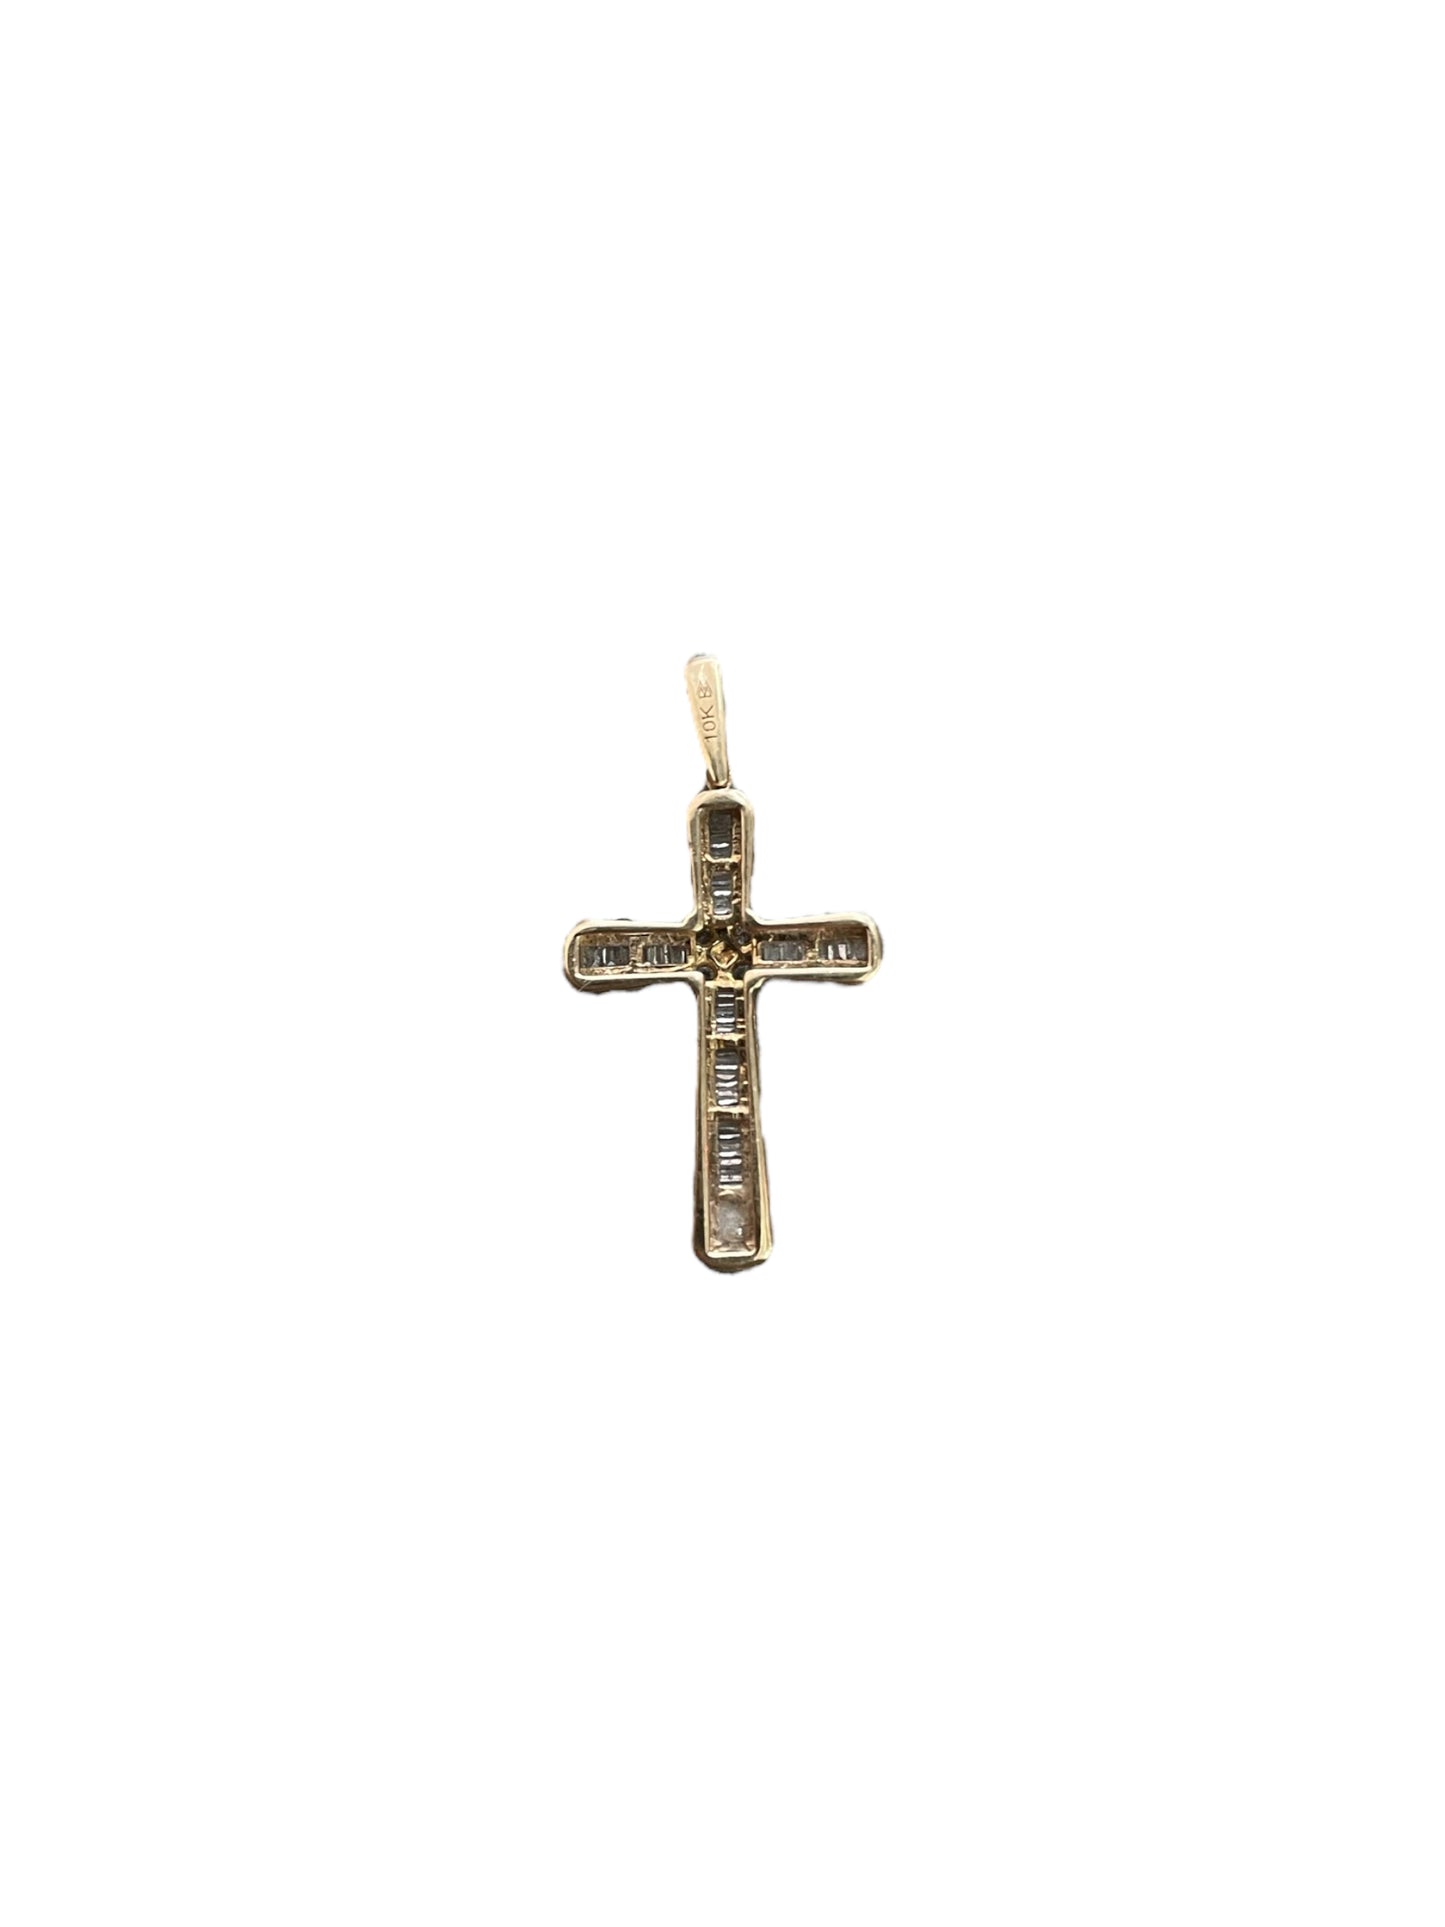 10K Yellow Gold Diamond Religious Cross Charm (1.6 Grams)